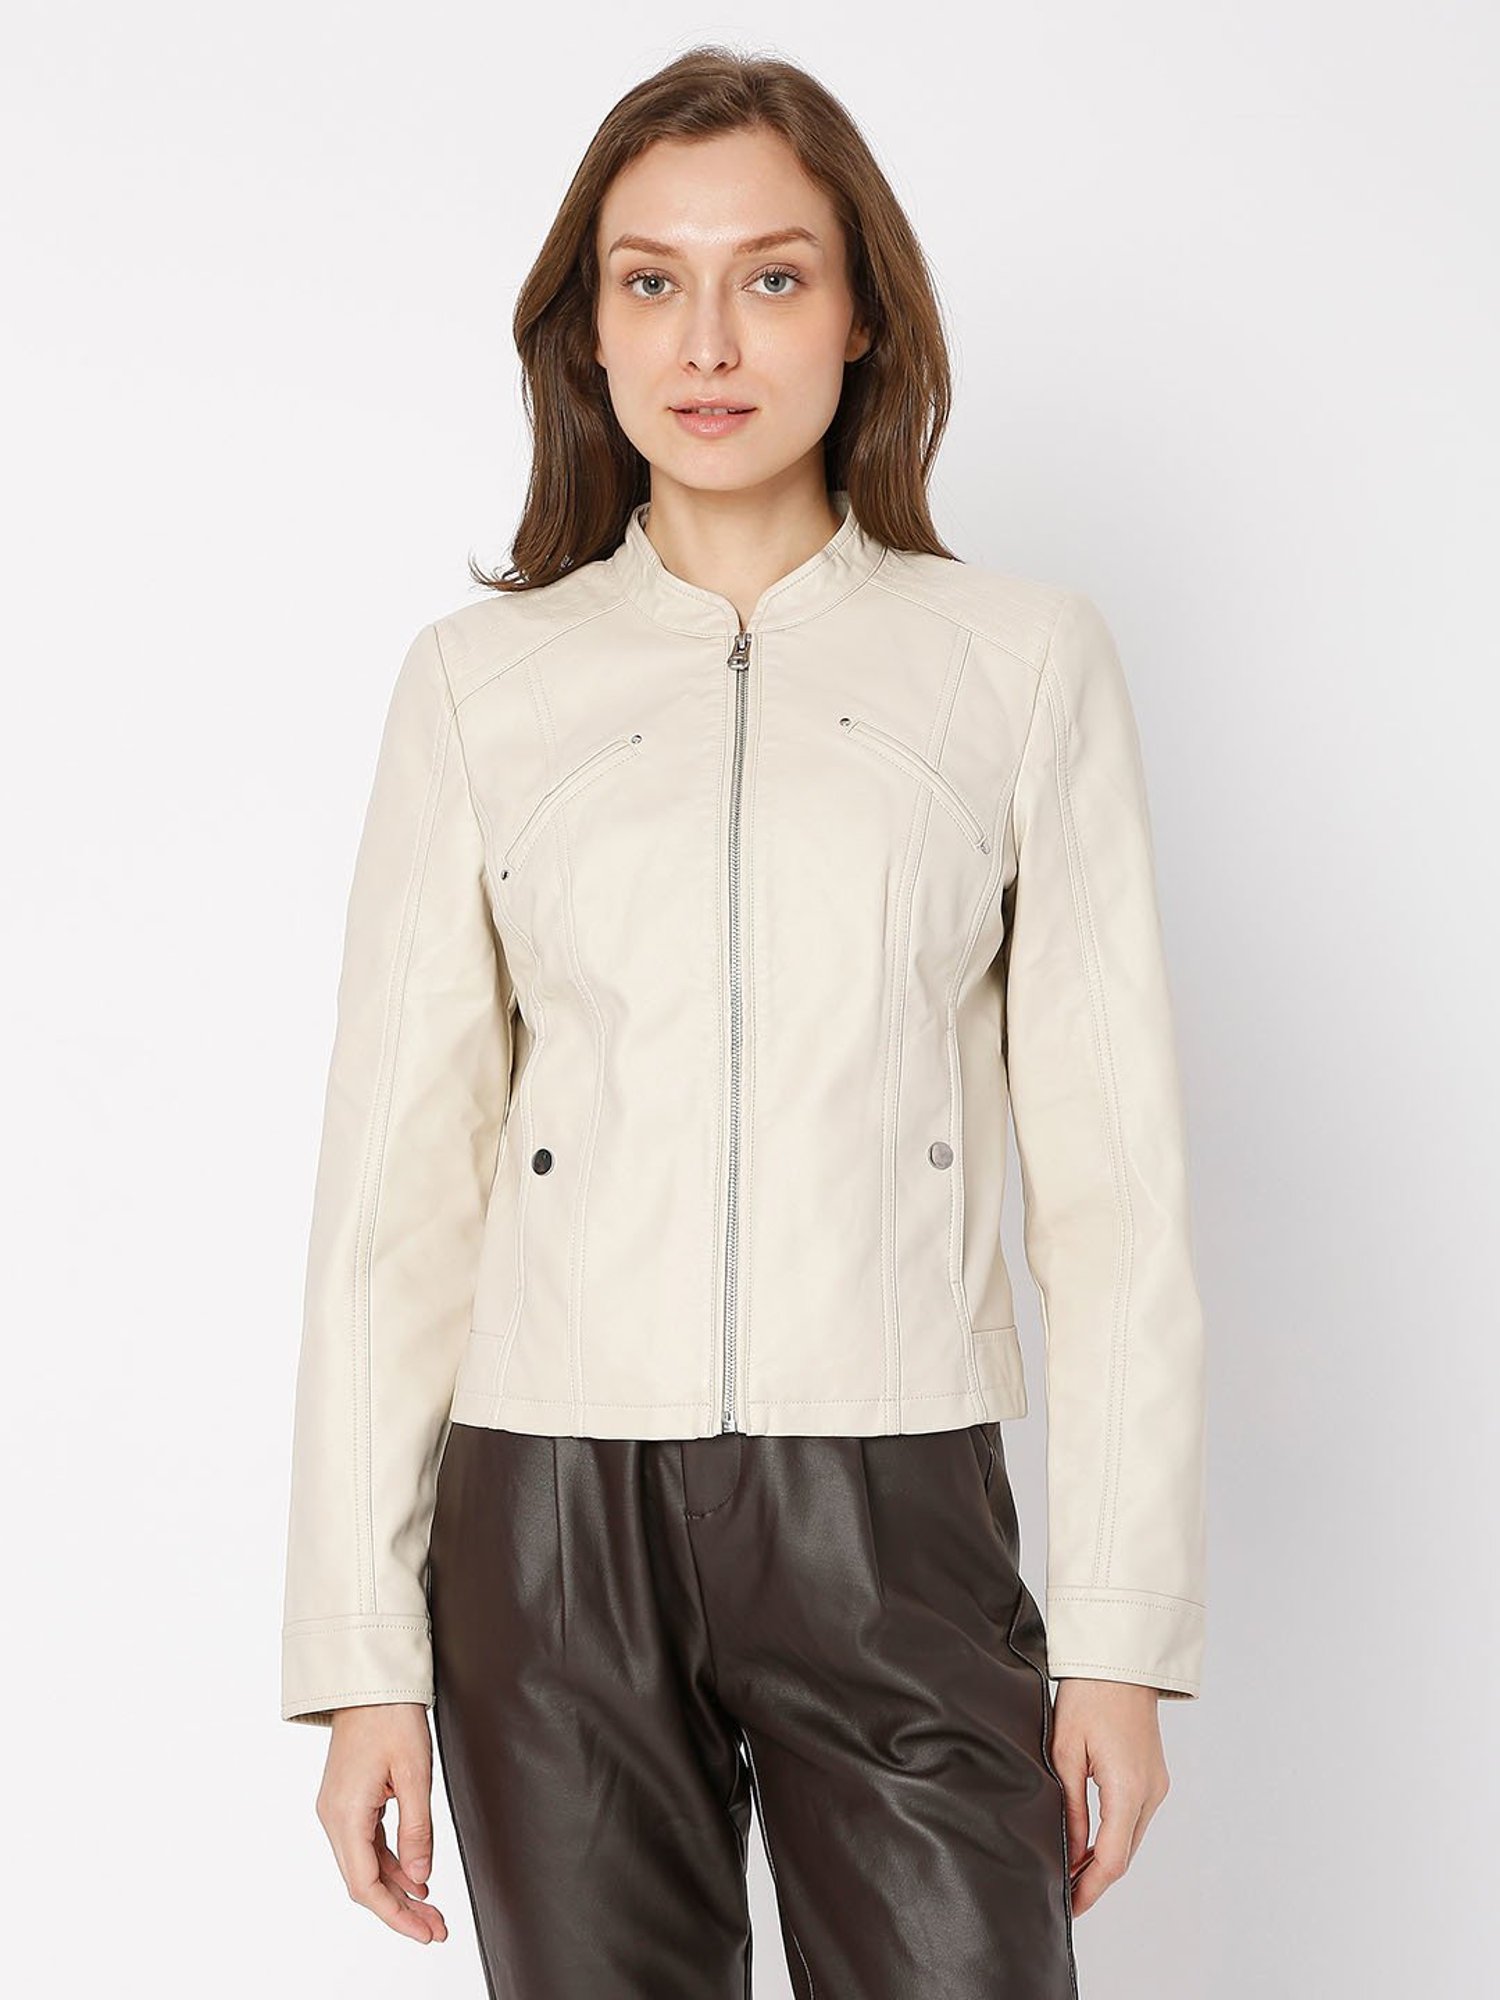 Brown Hooded Puffer Jacket for Women - VERO MODA